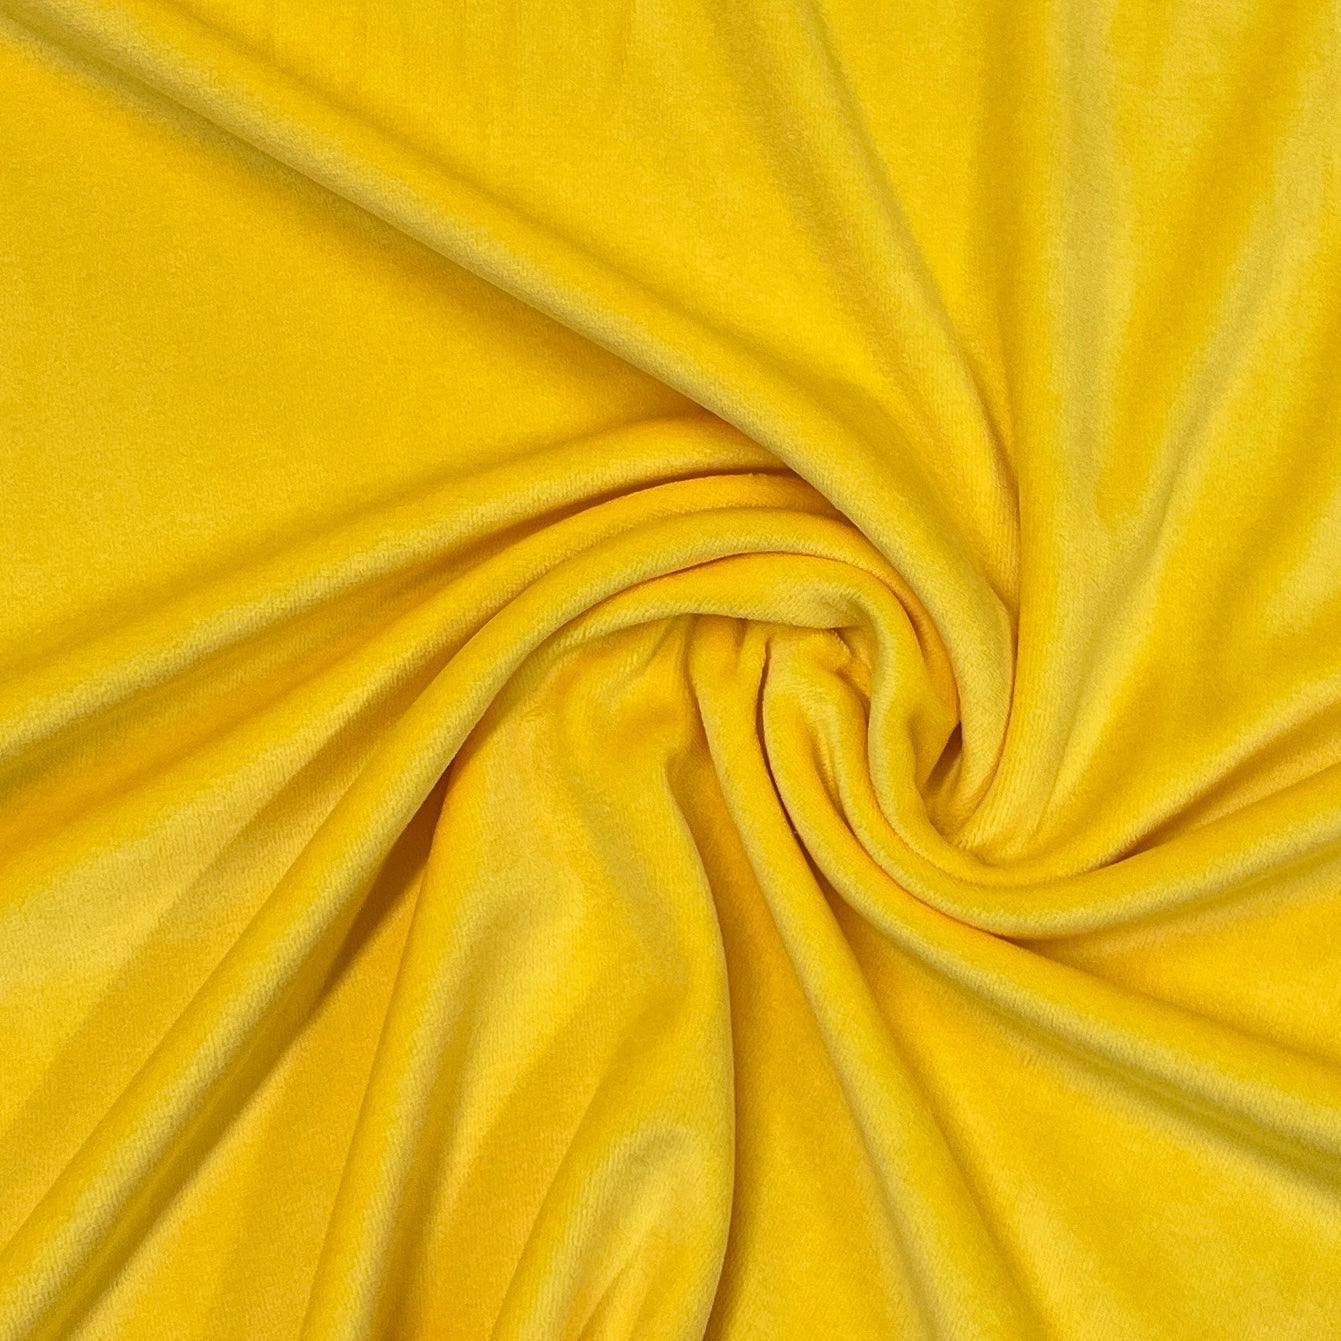 Eureka Gold Organic Cotton Velour Fabric, $8.59/yd - Rolls - Nature's Fabrics